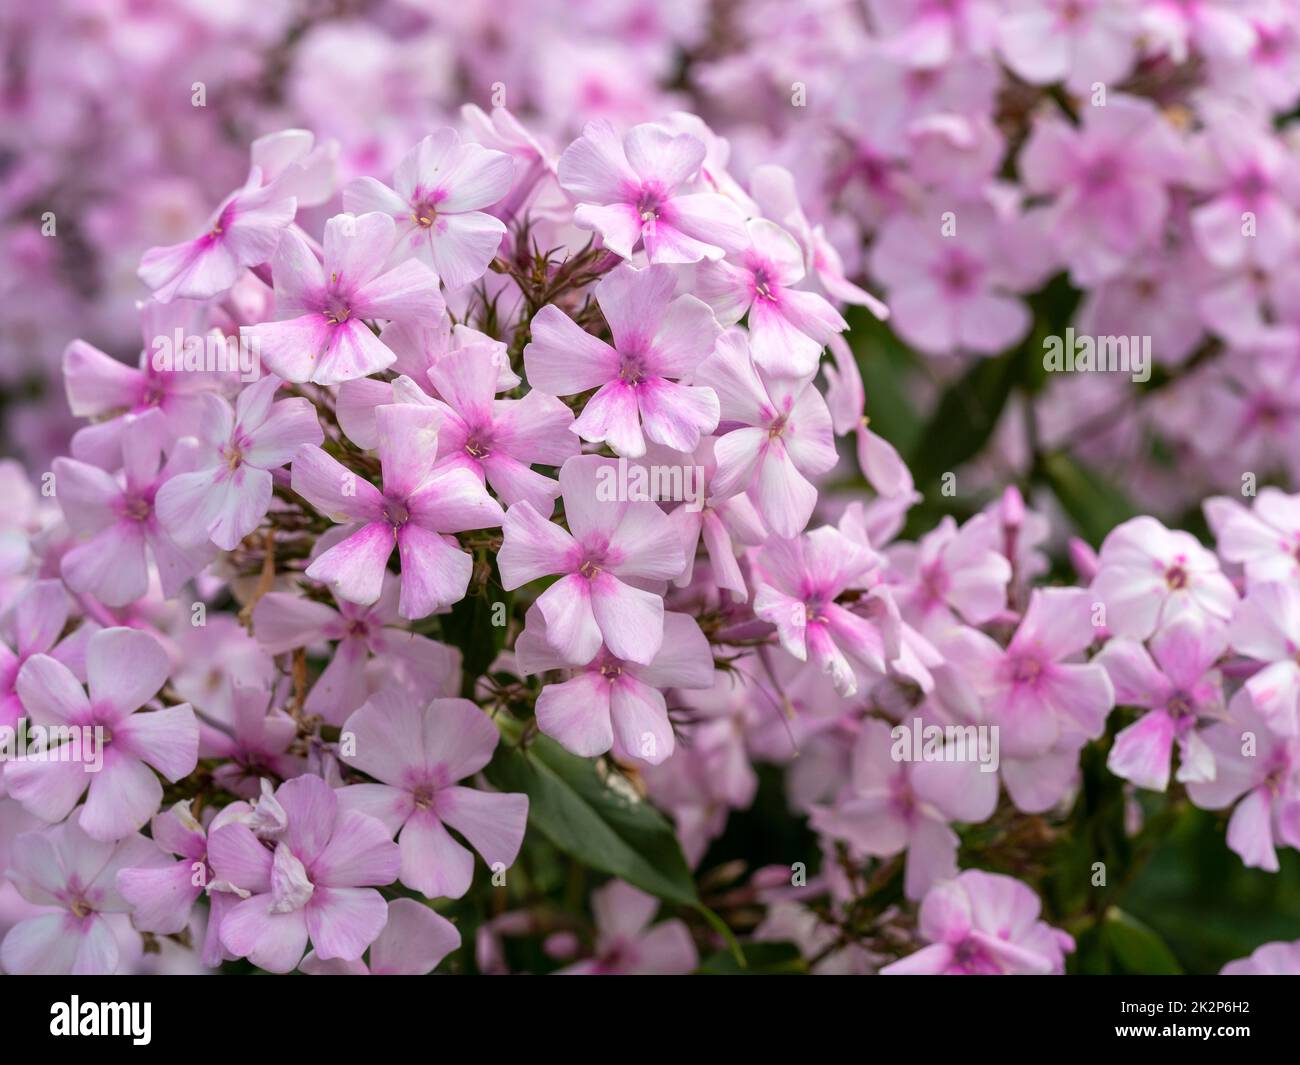 Closeup of pink flowers of Phlox paniculata Discovery Stock Photo